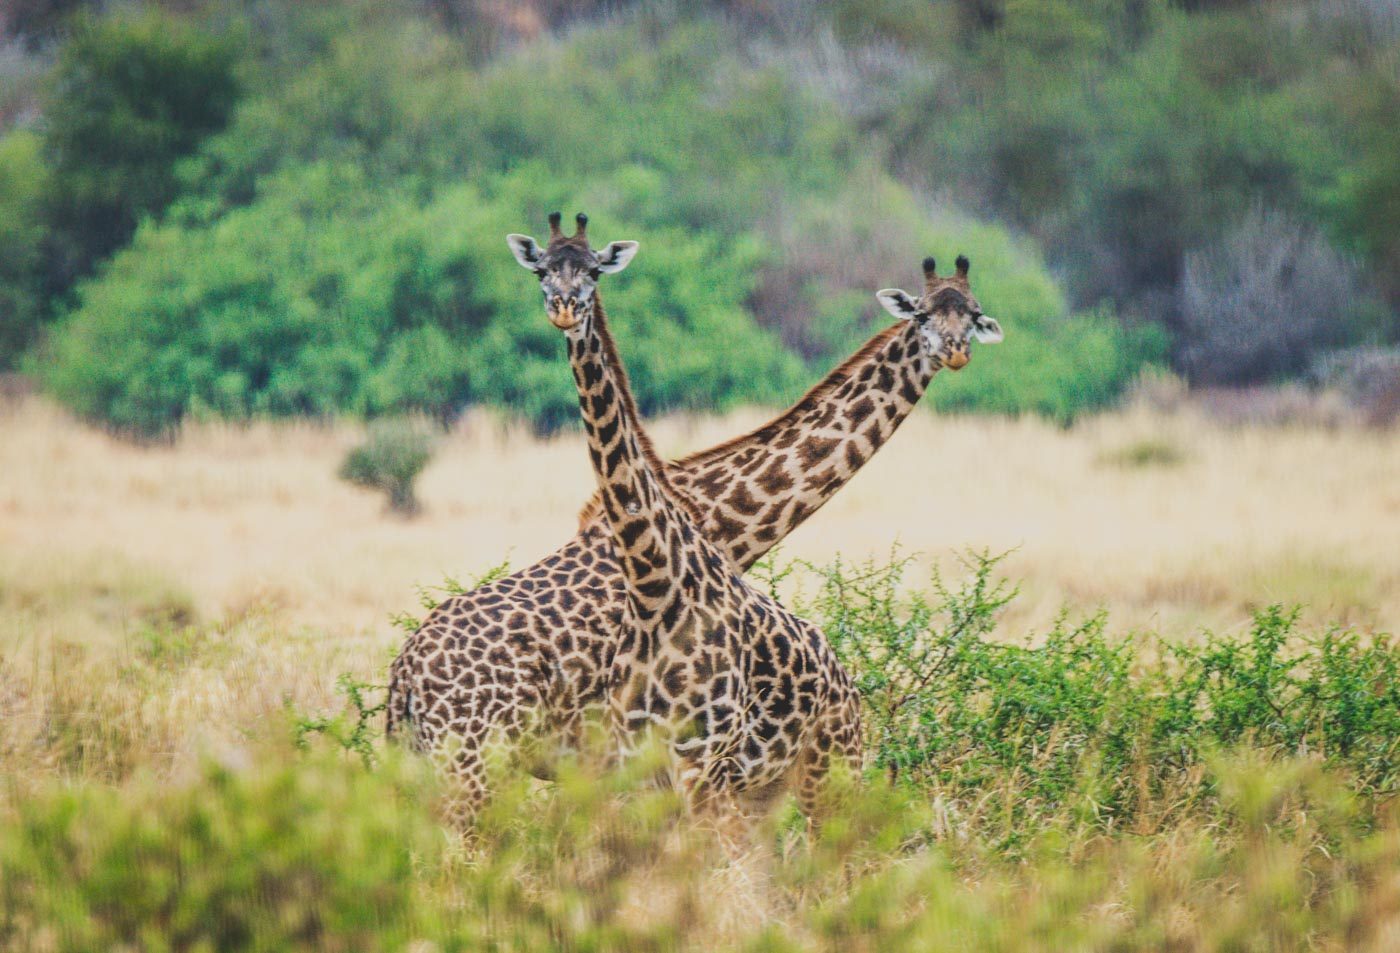 Serengeti Safari giraffes